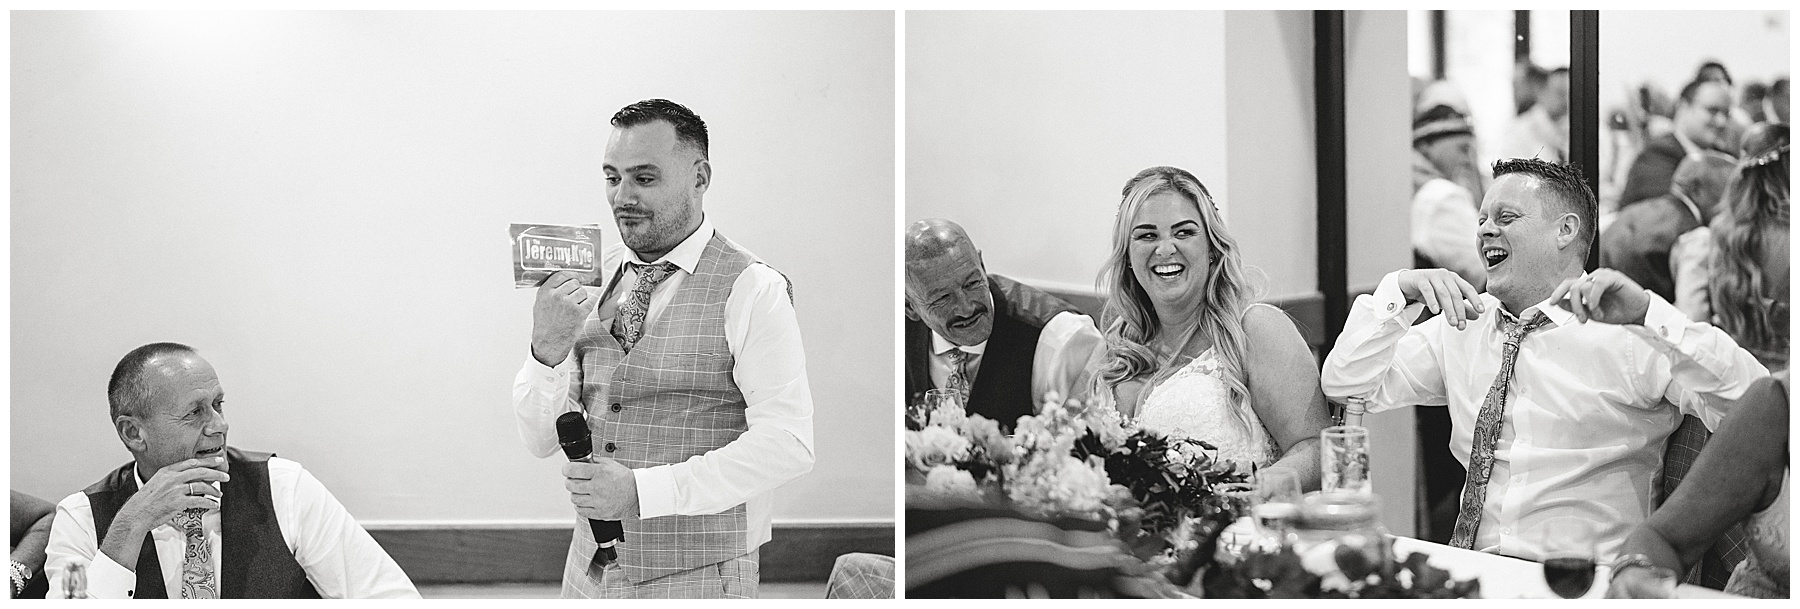 Wedding Speeches at Canada Lodge Cardiff